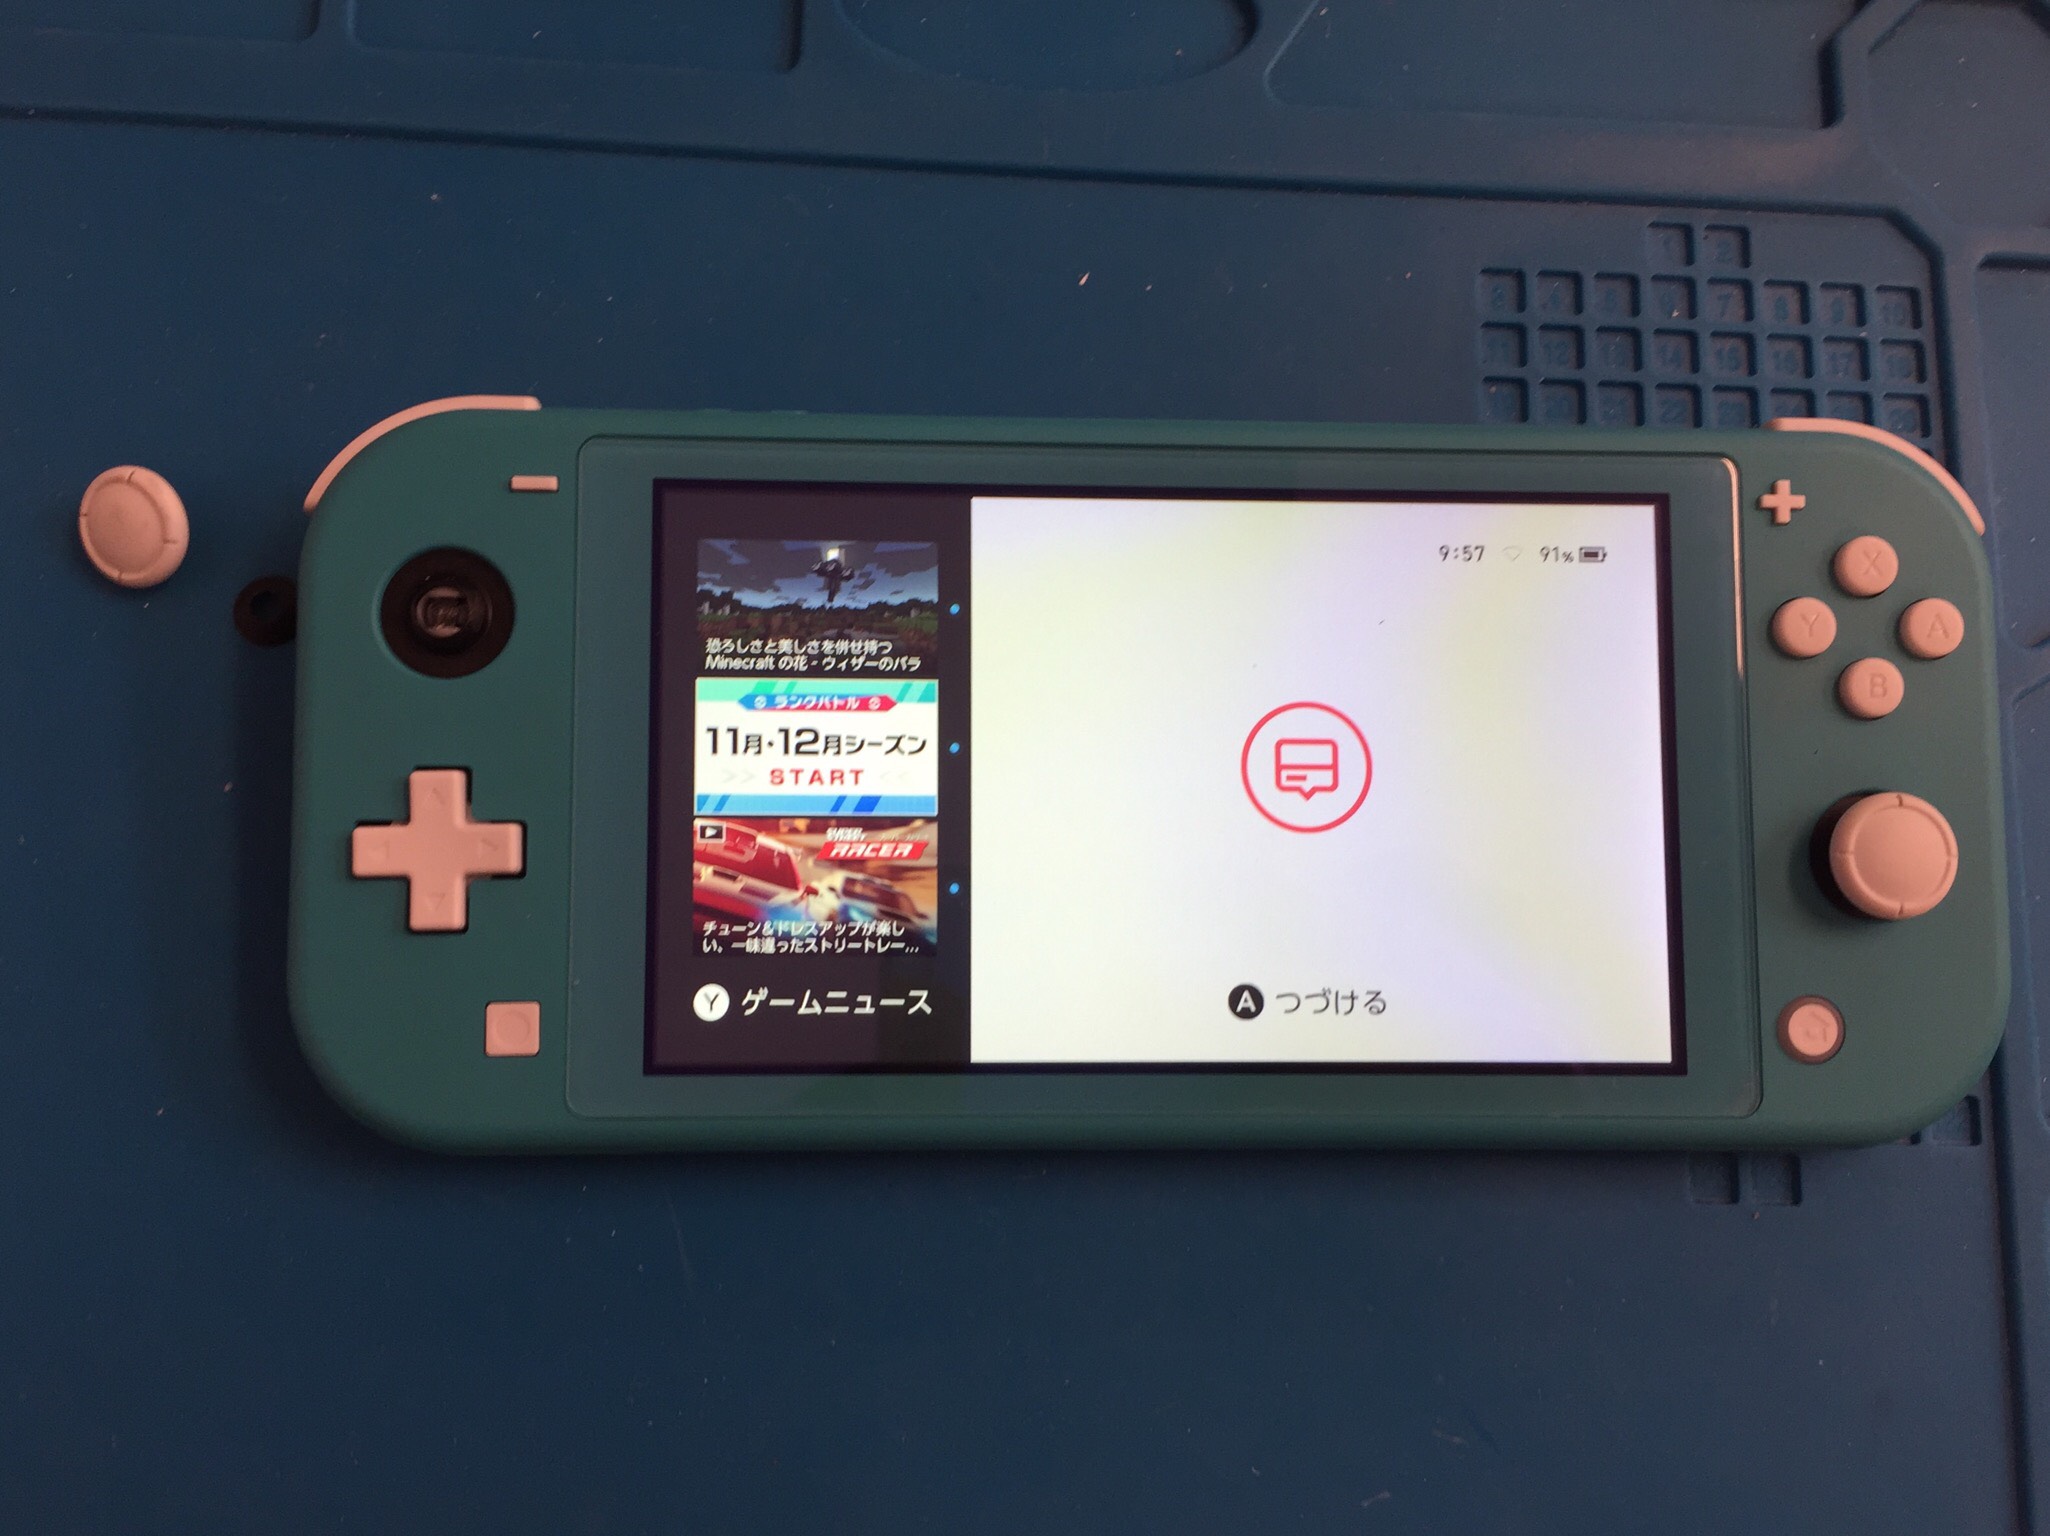 Nintendo Switch Lite アナログスティックがへし折れた 交換修理を行いました Nintendo3ds Switch Psp 修理のゲームホスピタル Nintendo3ds ニンテンドーds Psp Switch 修理